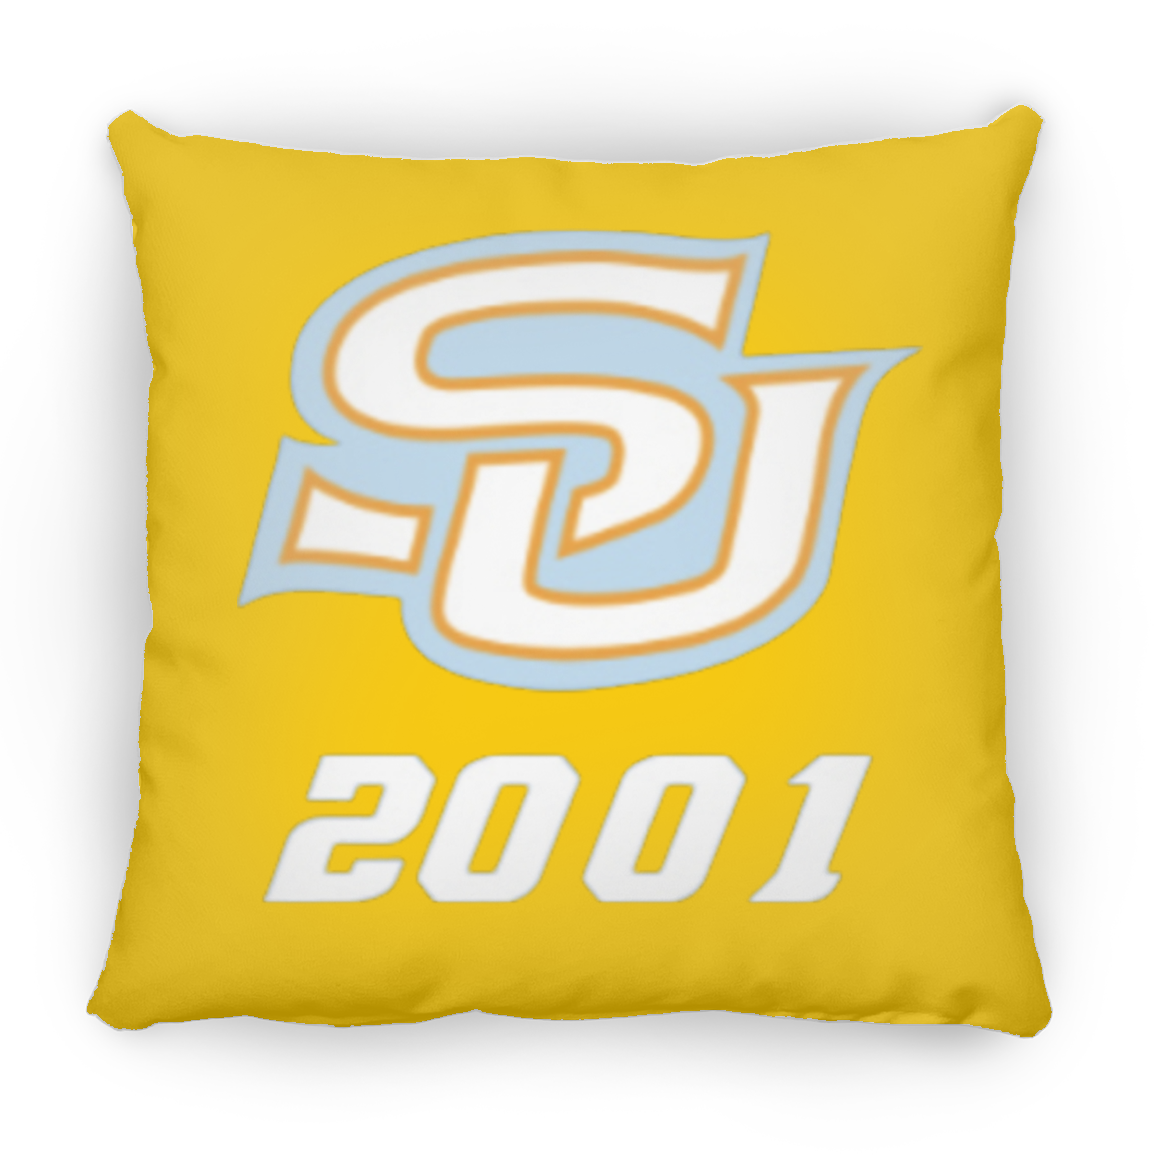 SU 2001 ZP16 Medium Square Pillow